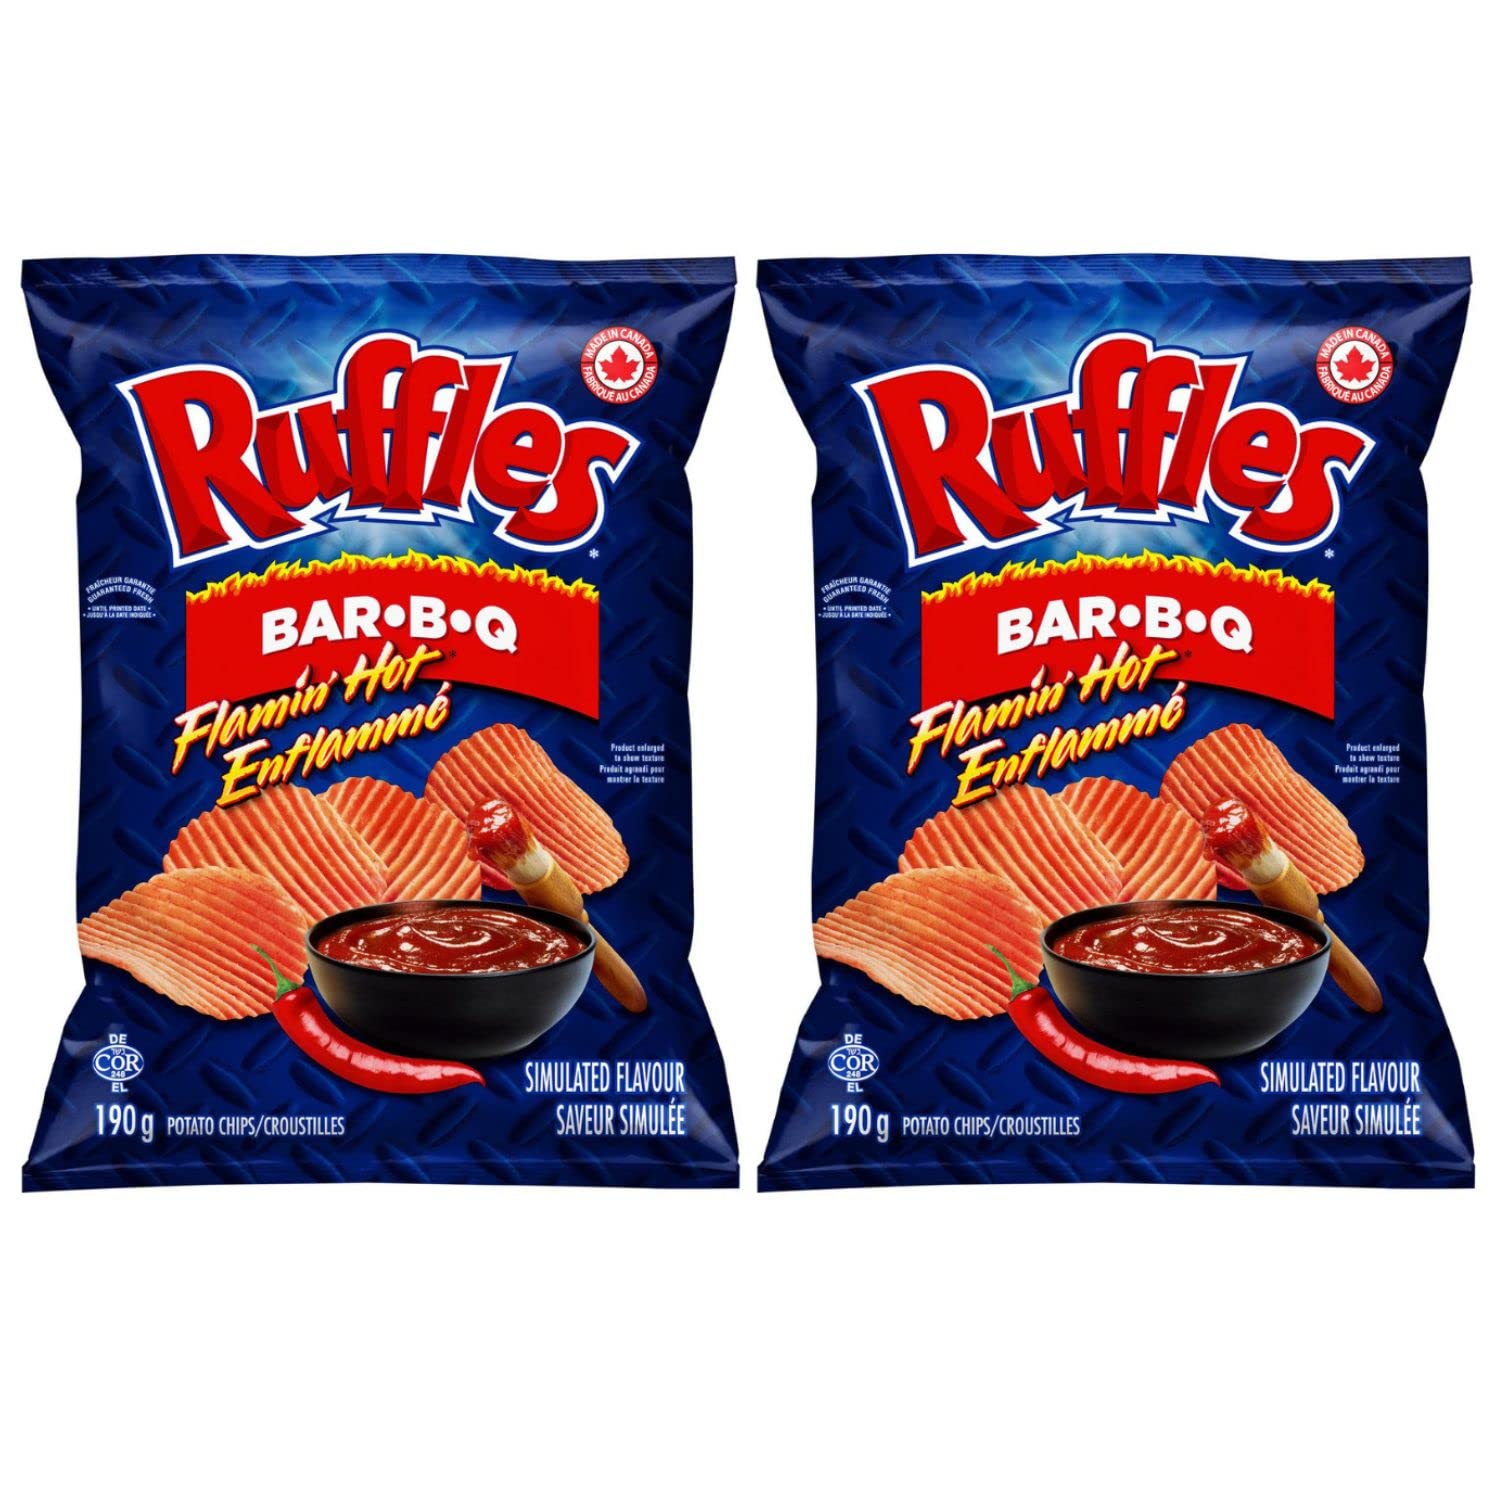 Ruffles Flamin' Hot Bar-B-Q Potato Chips pack of 2